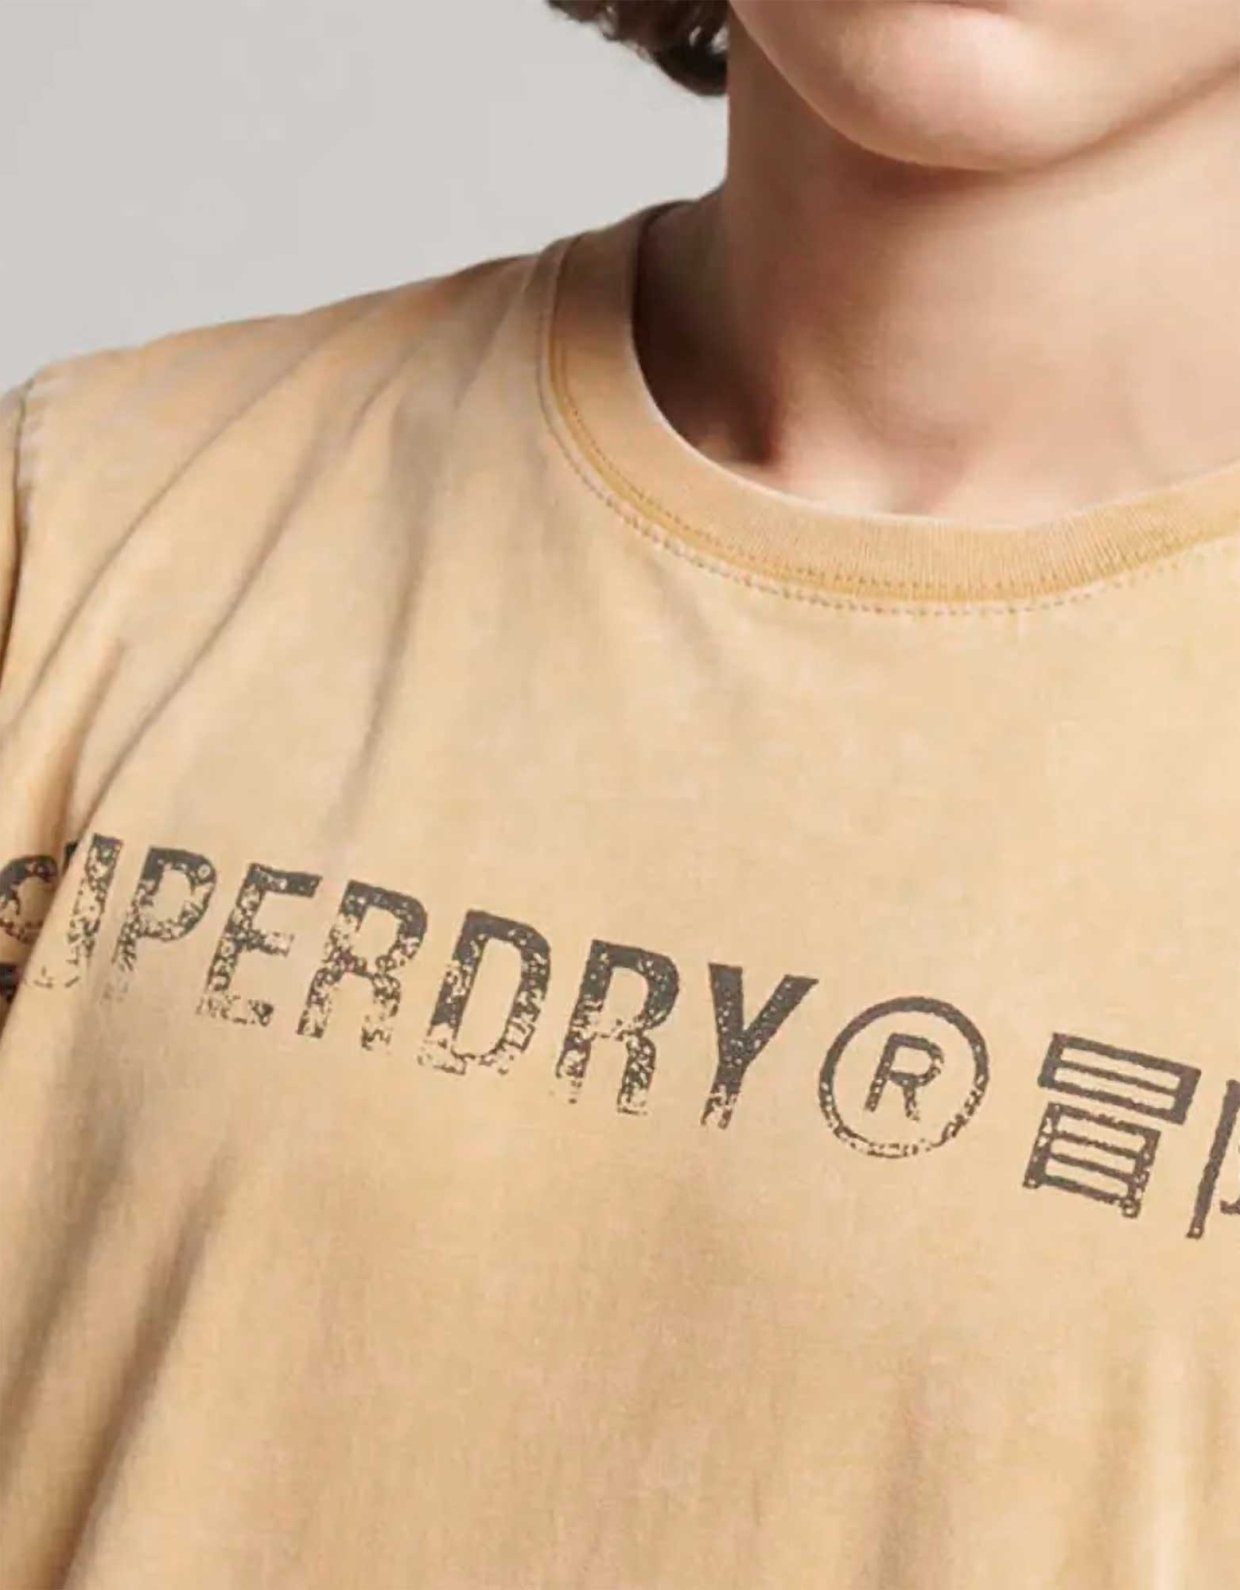 Superdry Vintage corp logo tee dried clay brown